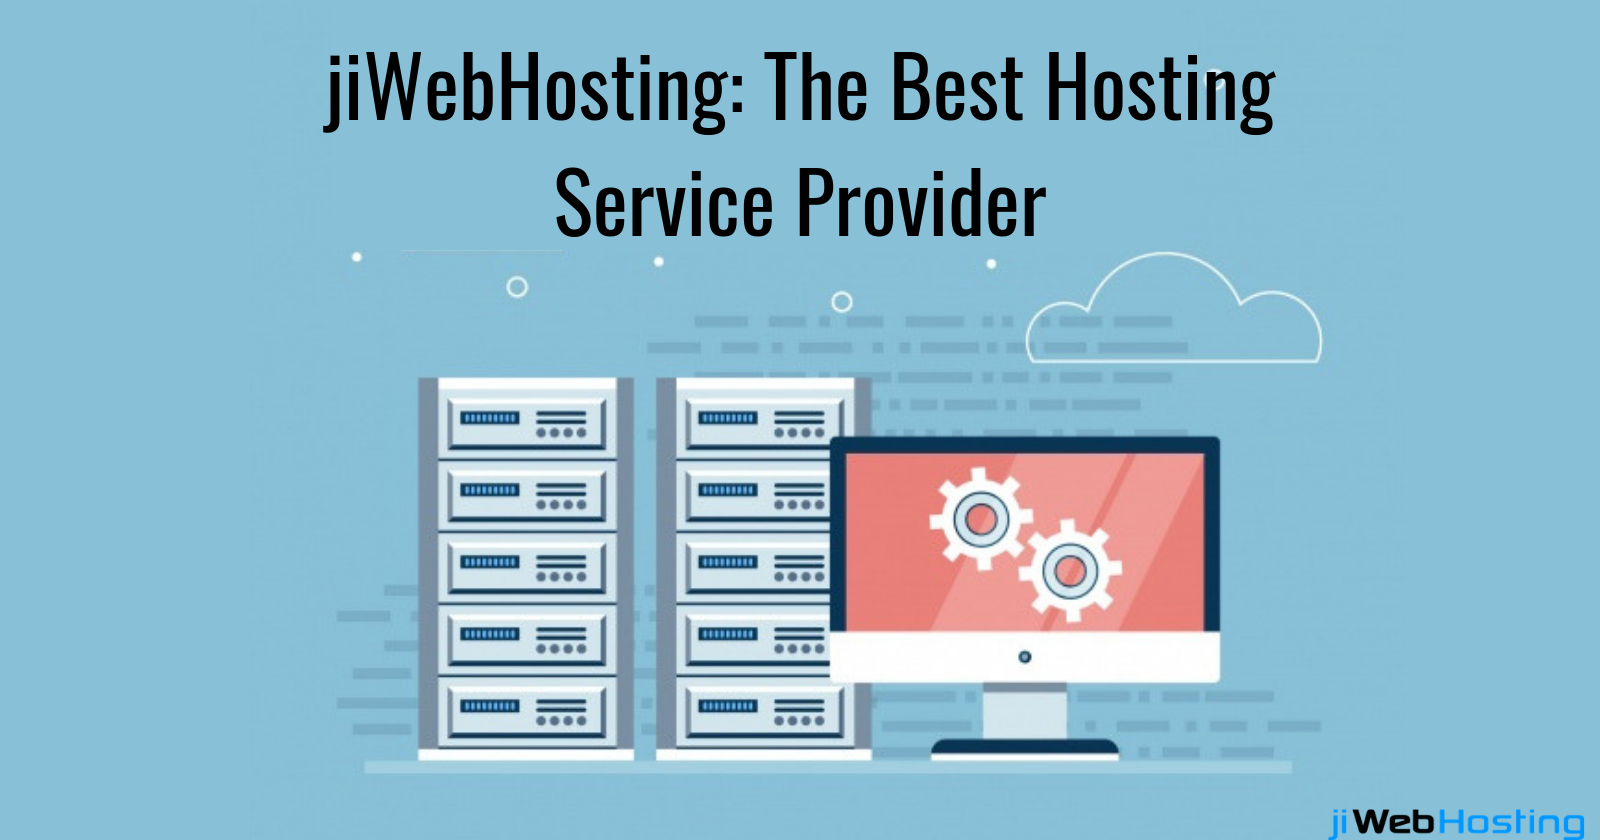 What Makes jiWebHosting The Best Hosting Service Provider?